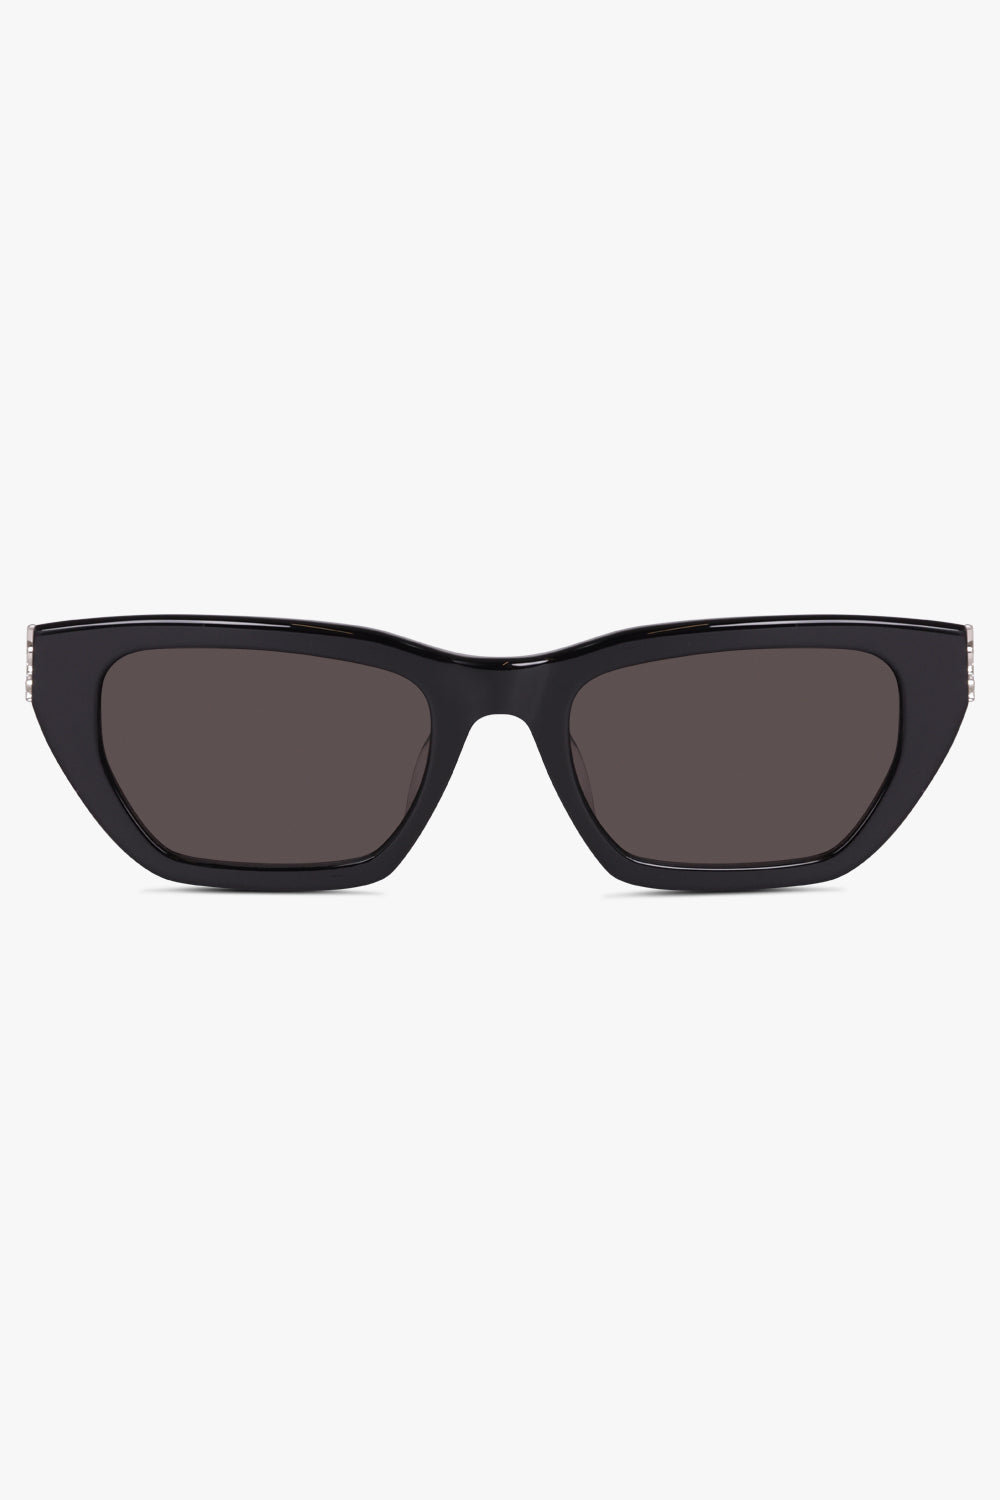 SAINT LAURENT ACCS Black 127/F Sunglasses | Black & Silver/Black